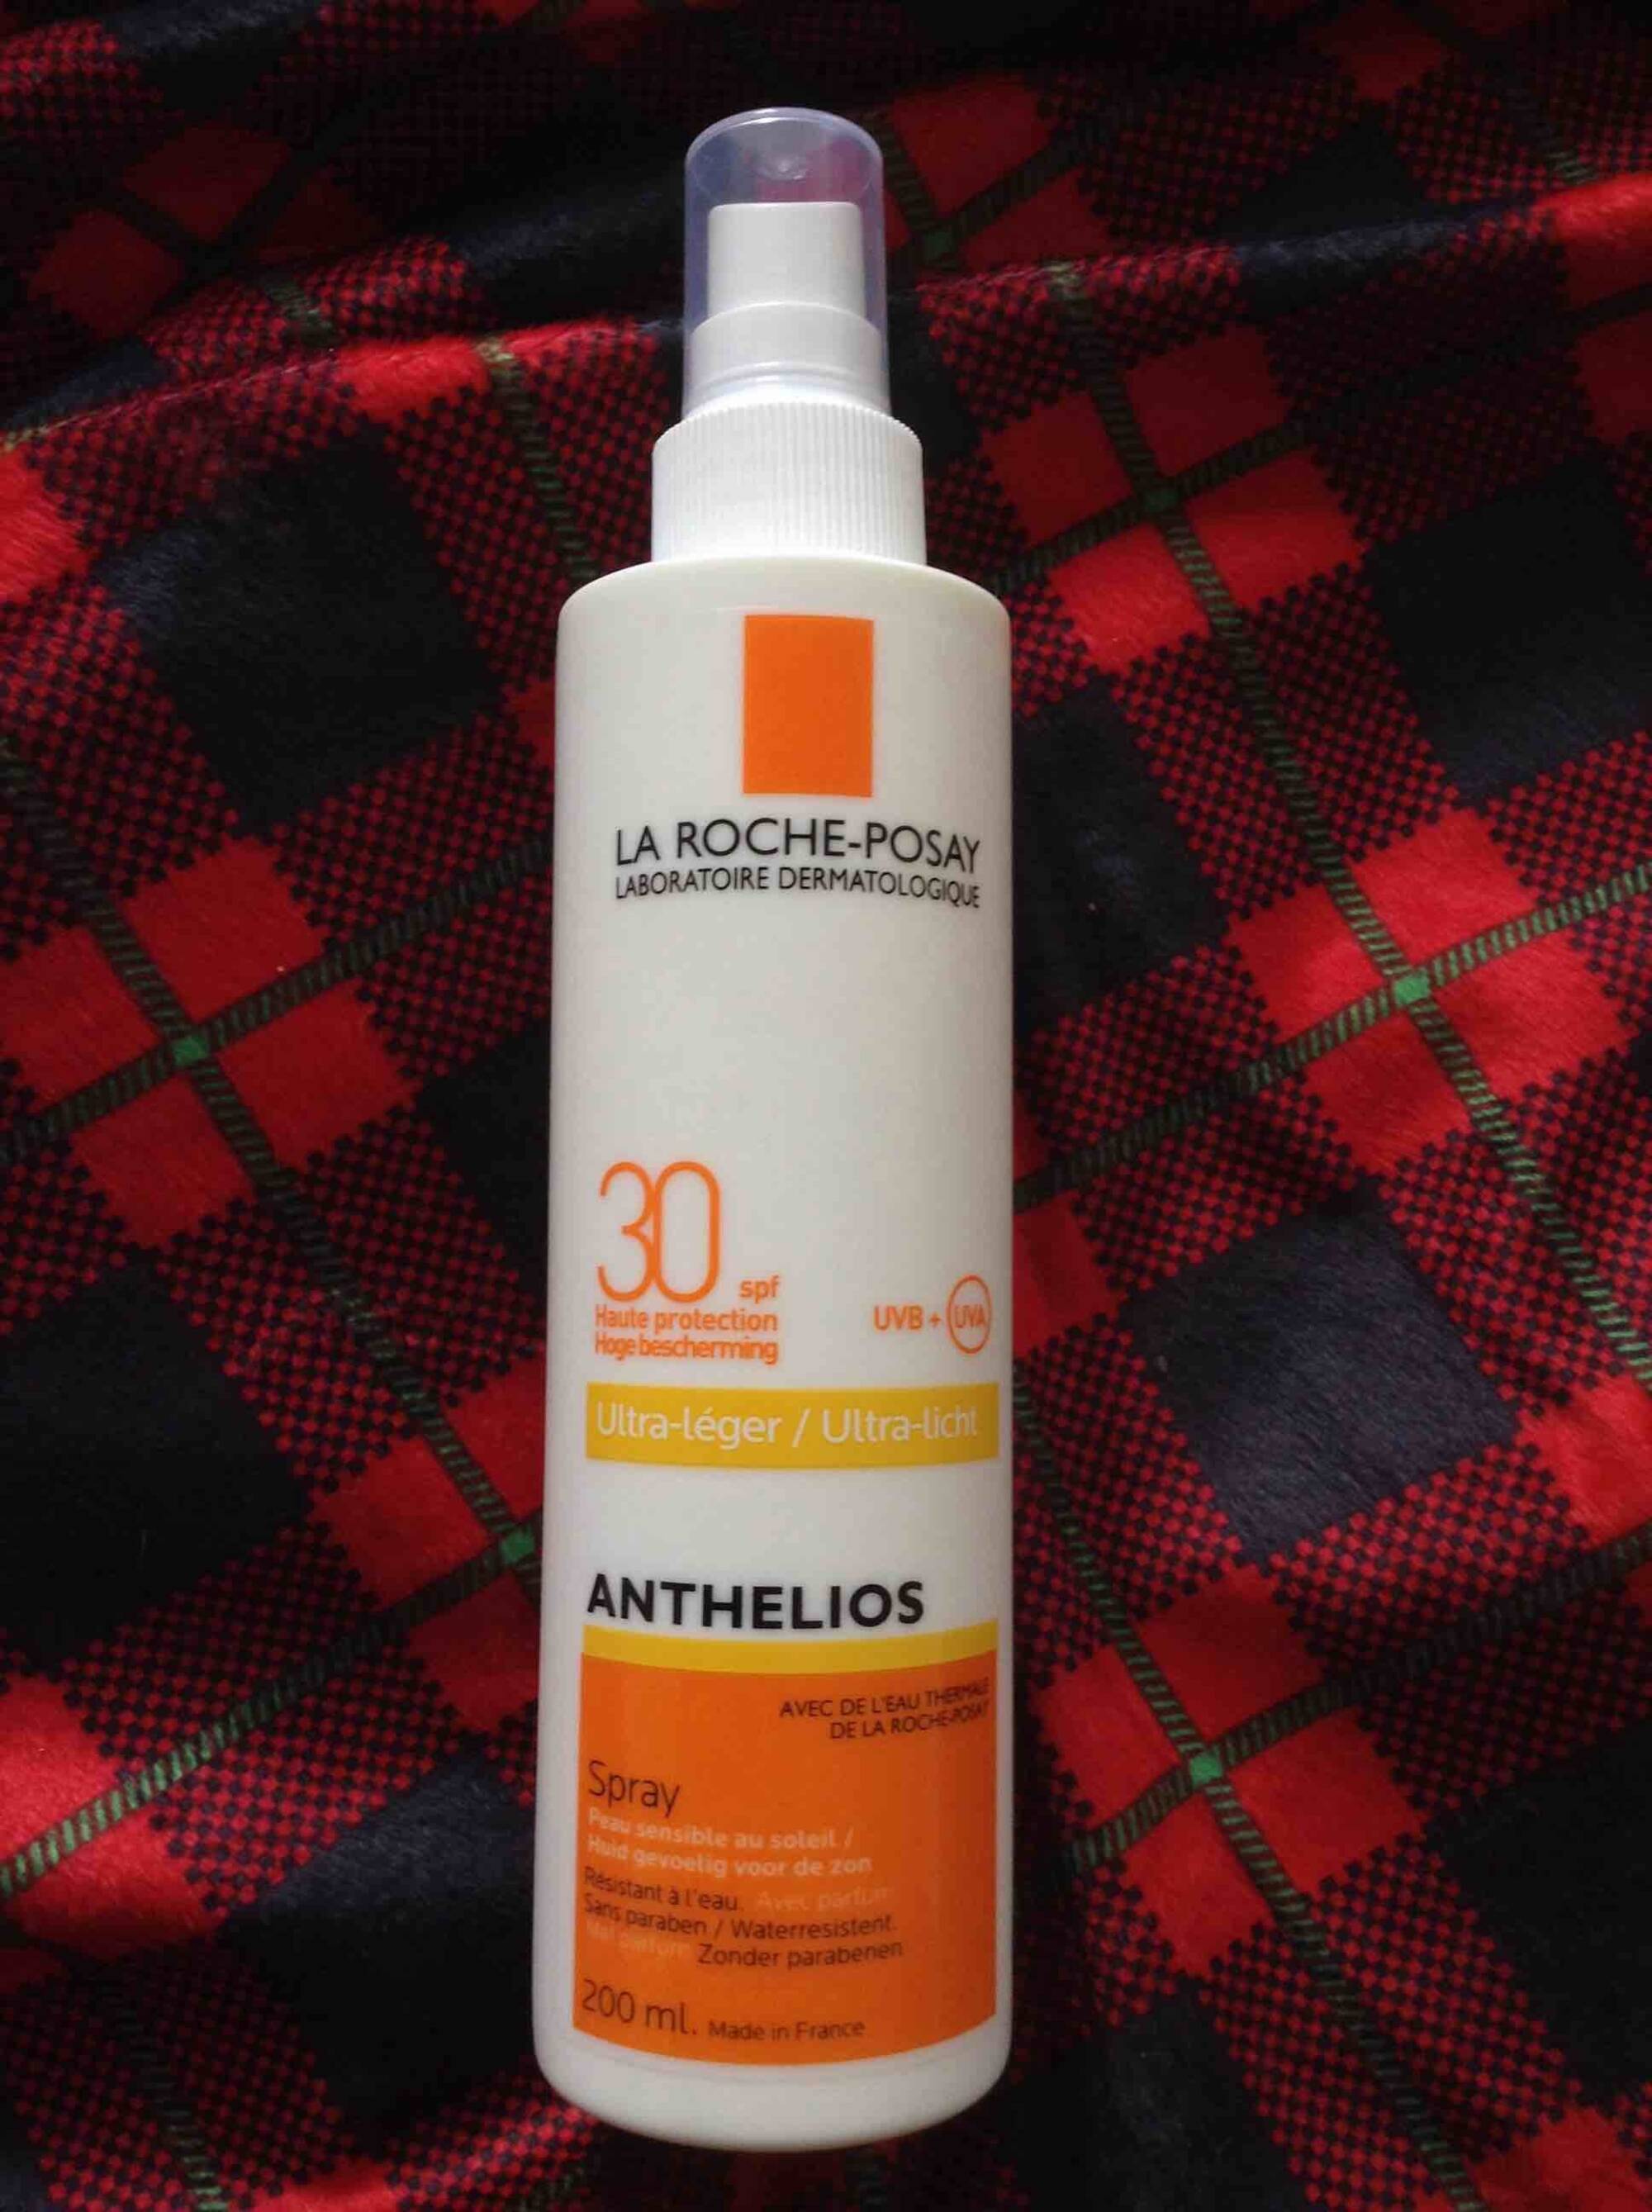 LA ROCHE-POSAY - Anthelios spray spf 30